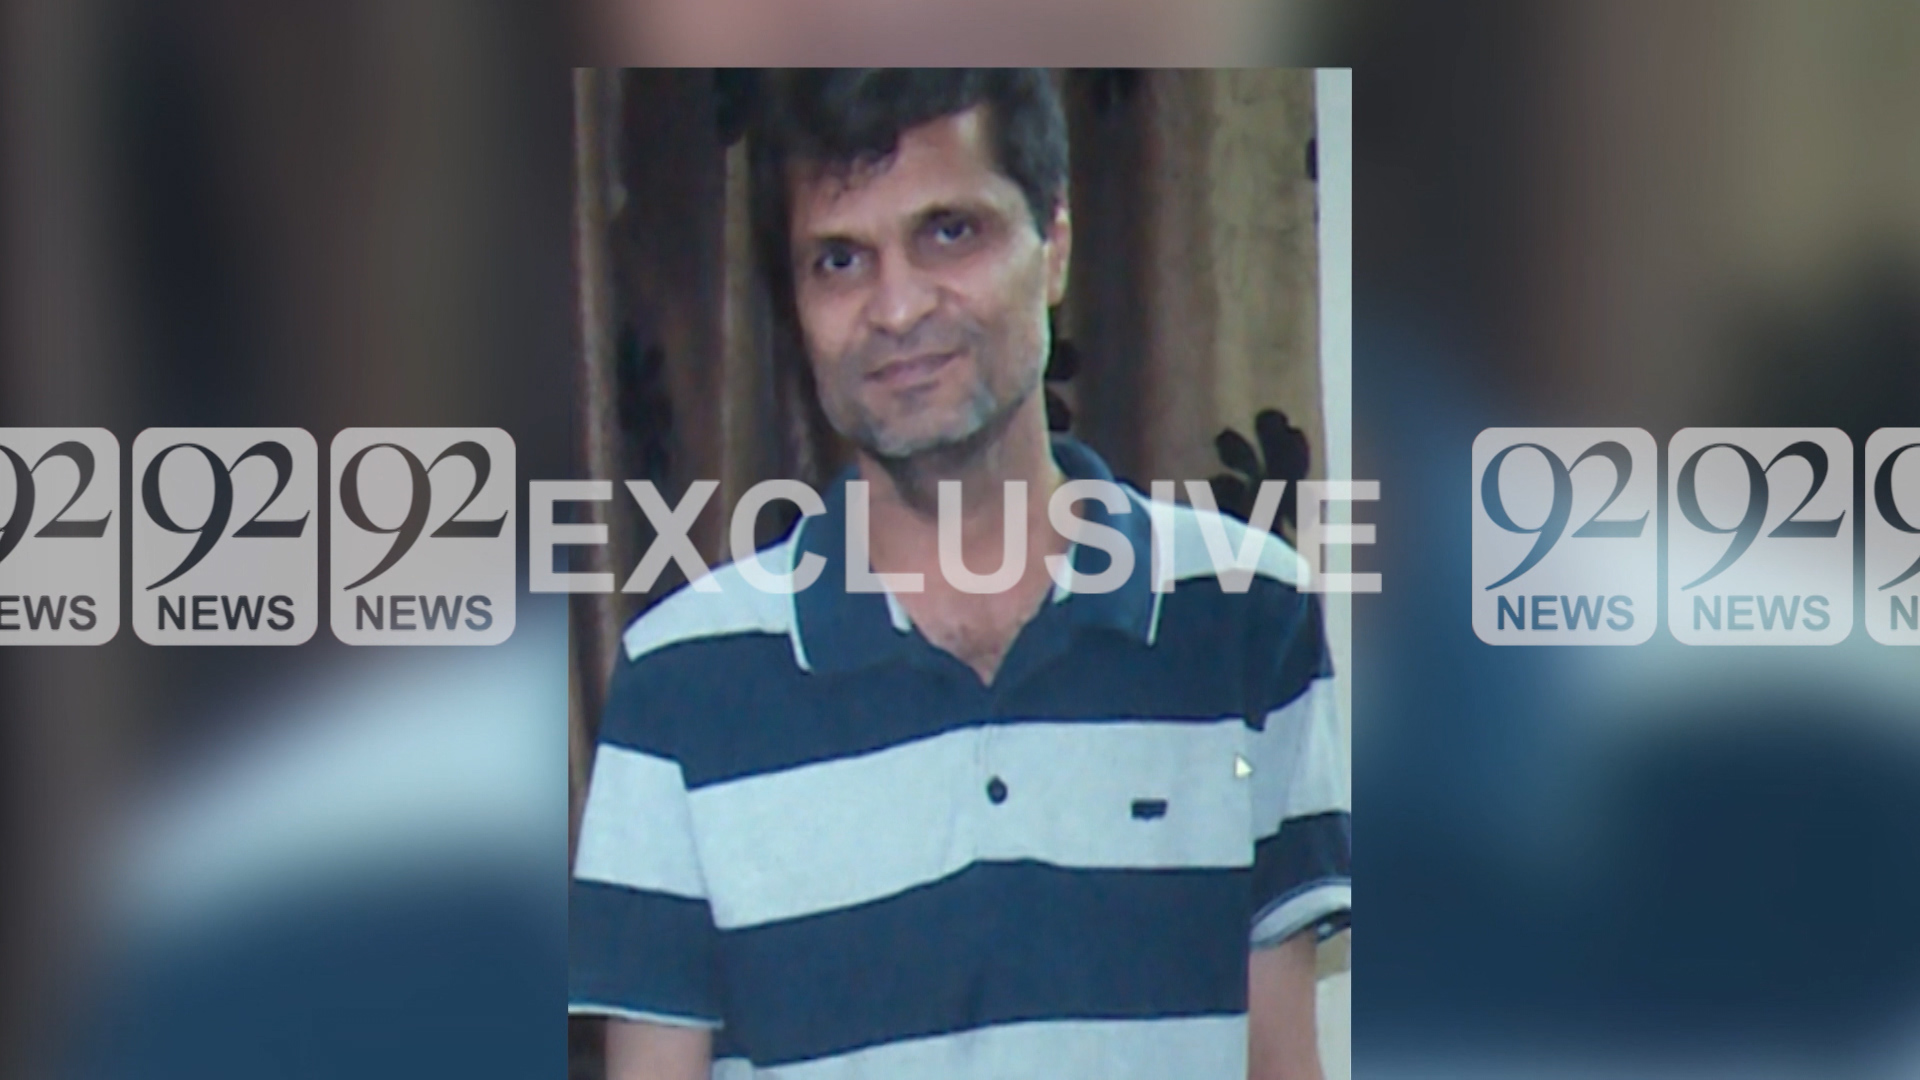 Imran Farooq murder case: JIT formed to investigate Muazzam